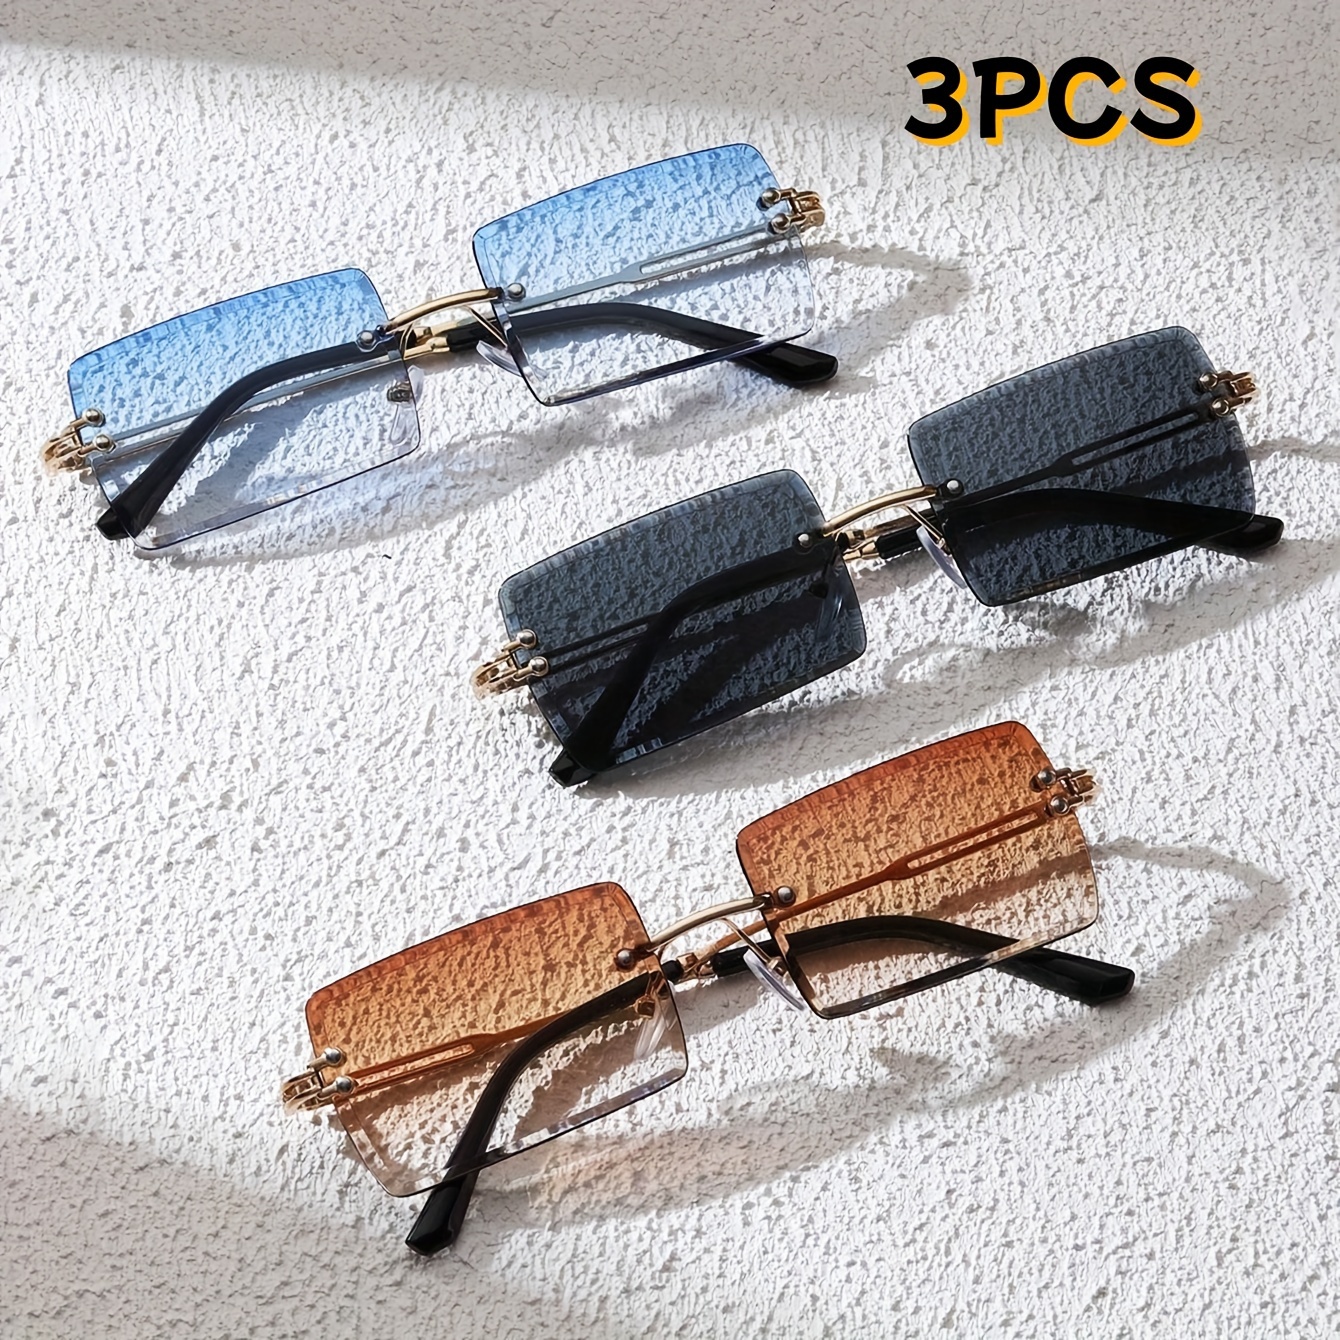 

3 Pcs Rimless Rectangular Glasses Gradient Lenses, Metal Fashion Eyewear, For Outdoor, Beach, And Travel, Stylish Frameless Glasses Set